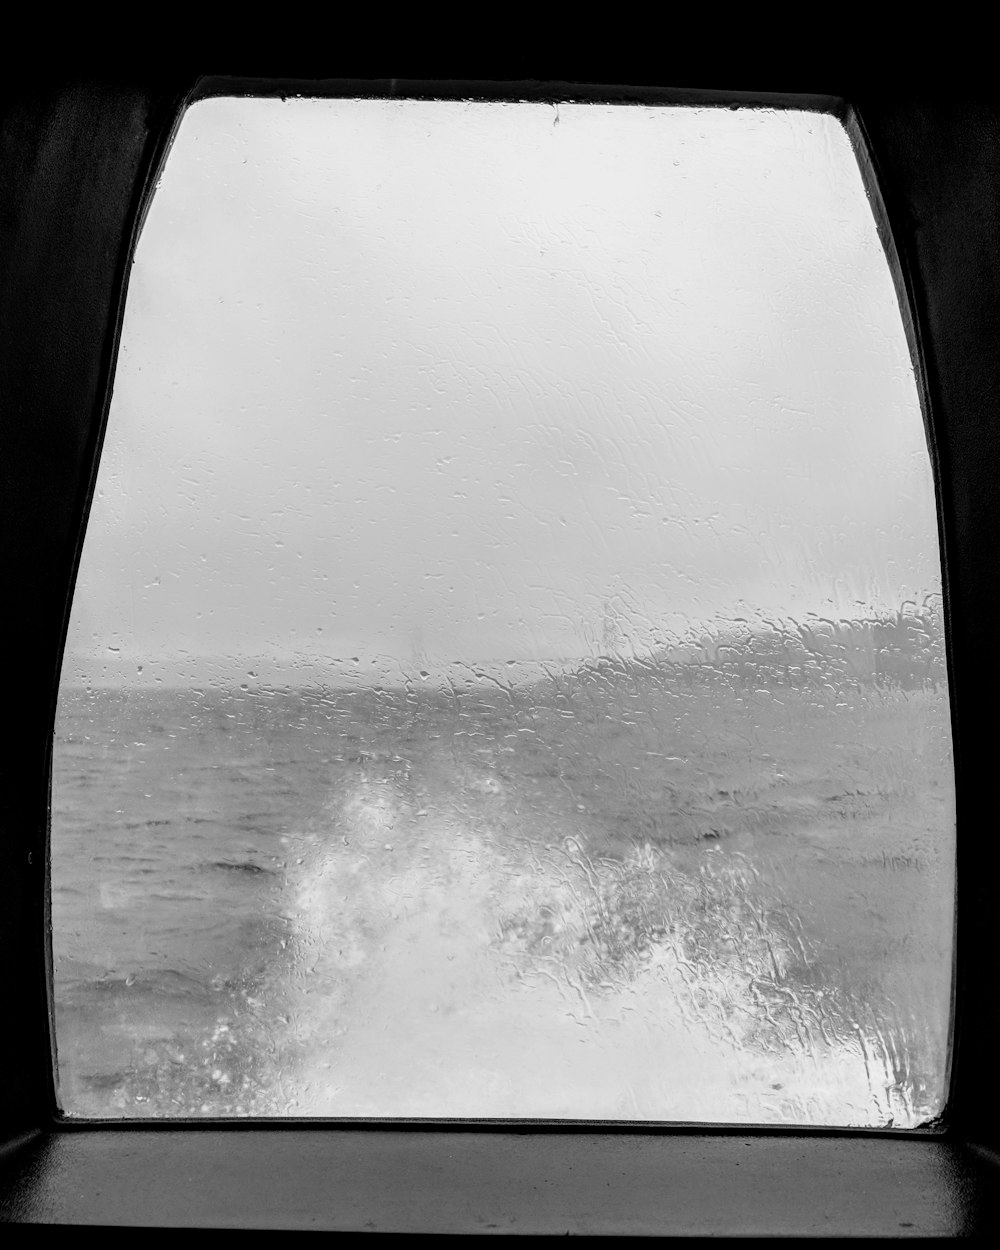 sea waves splashing trough boat window